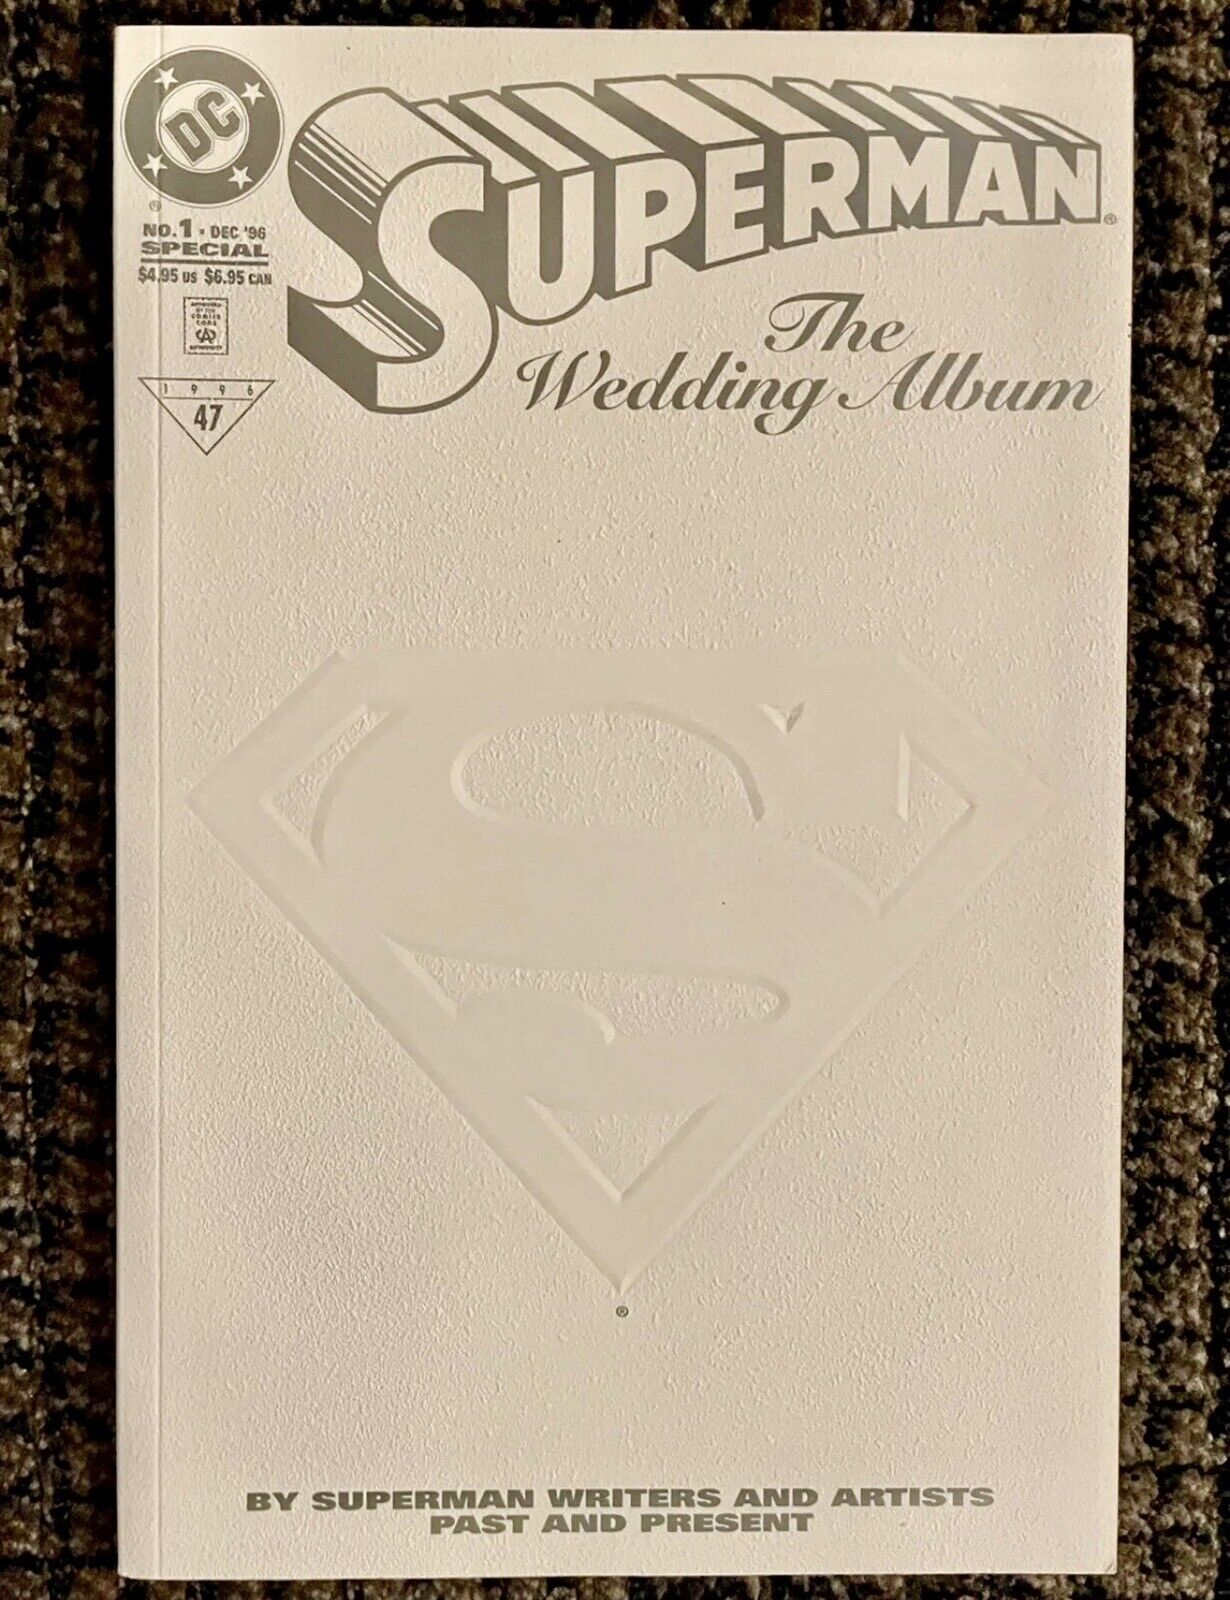 Superman #47 The Wedding Album (DC Comics, 1996) VF/NM